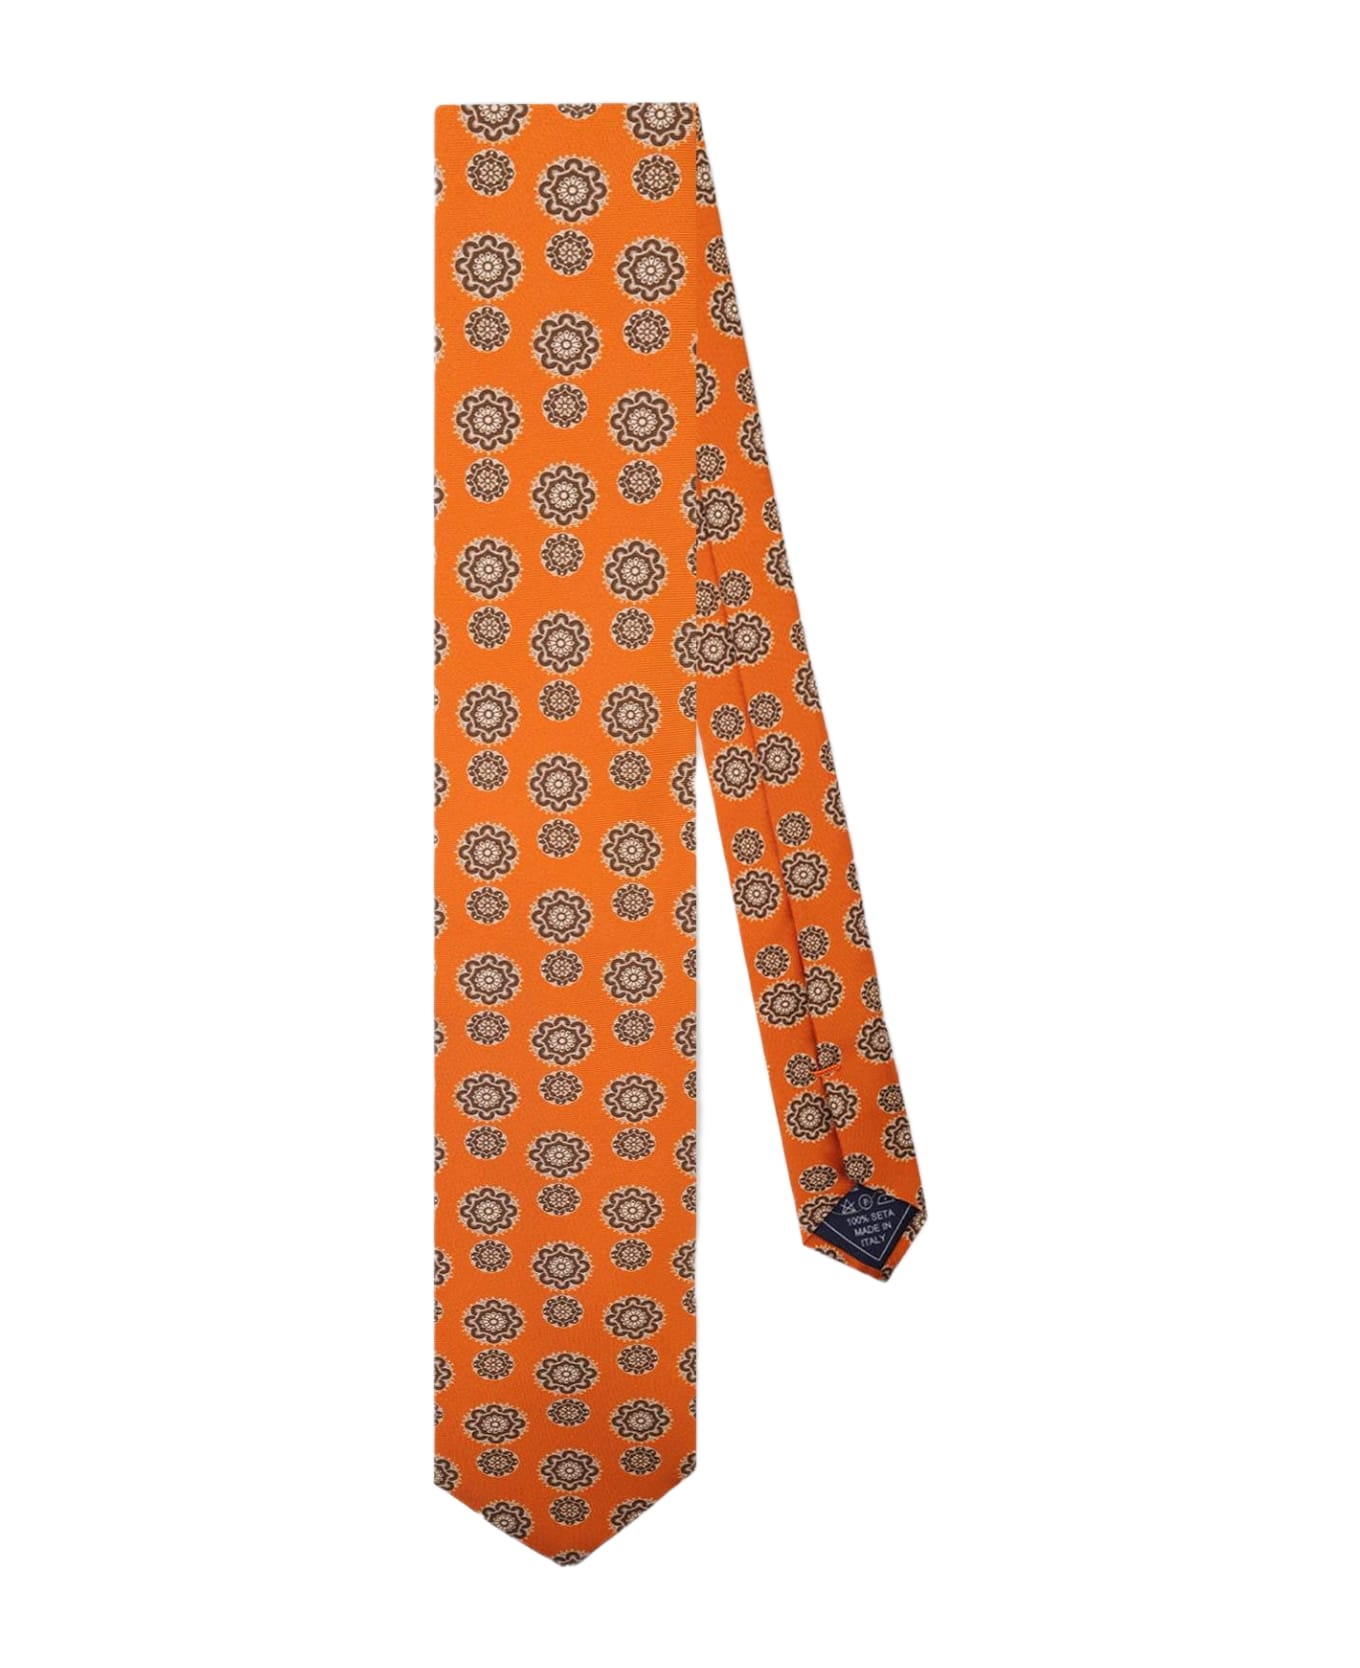 Larusmiani Tie 'arabesque' Tie - Orange ネクタイ